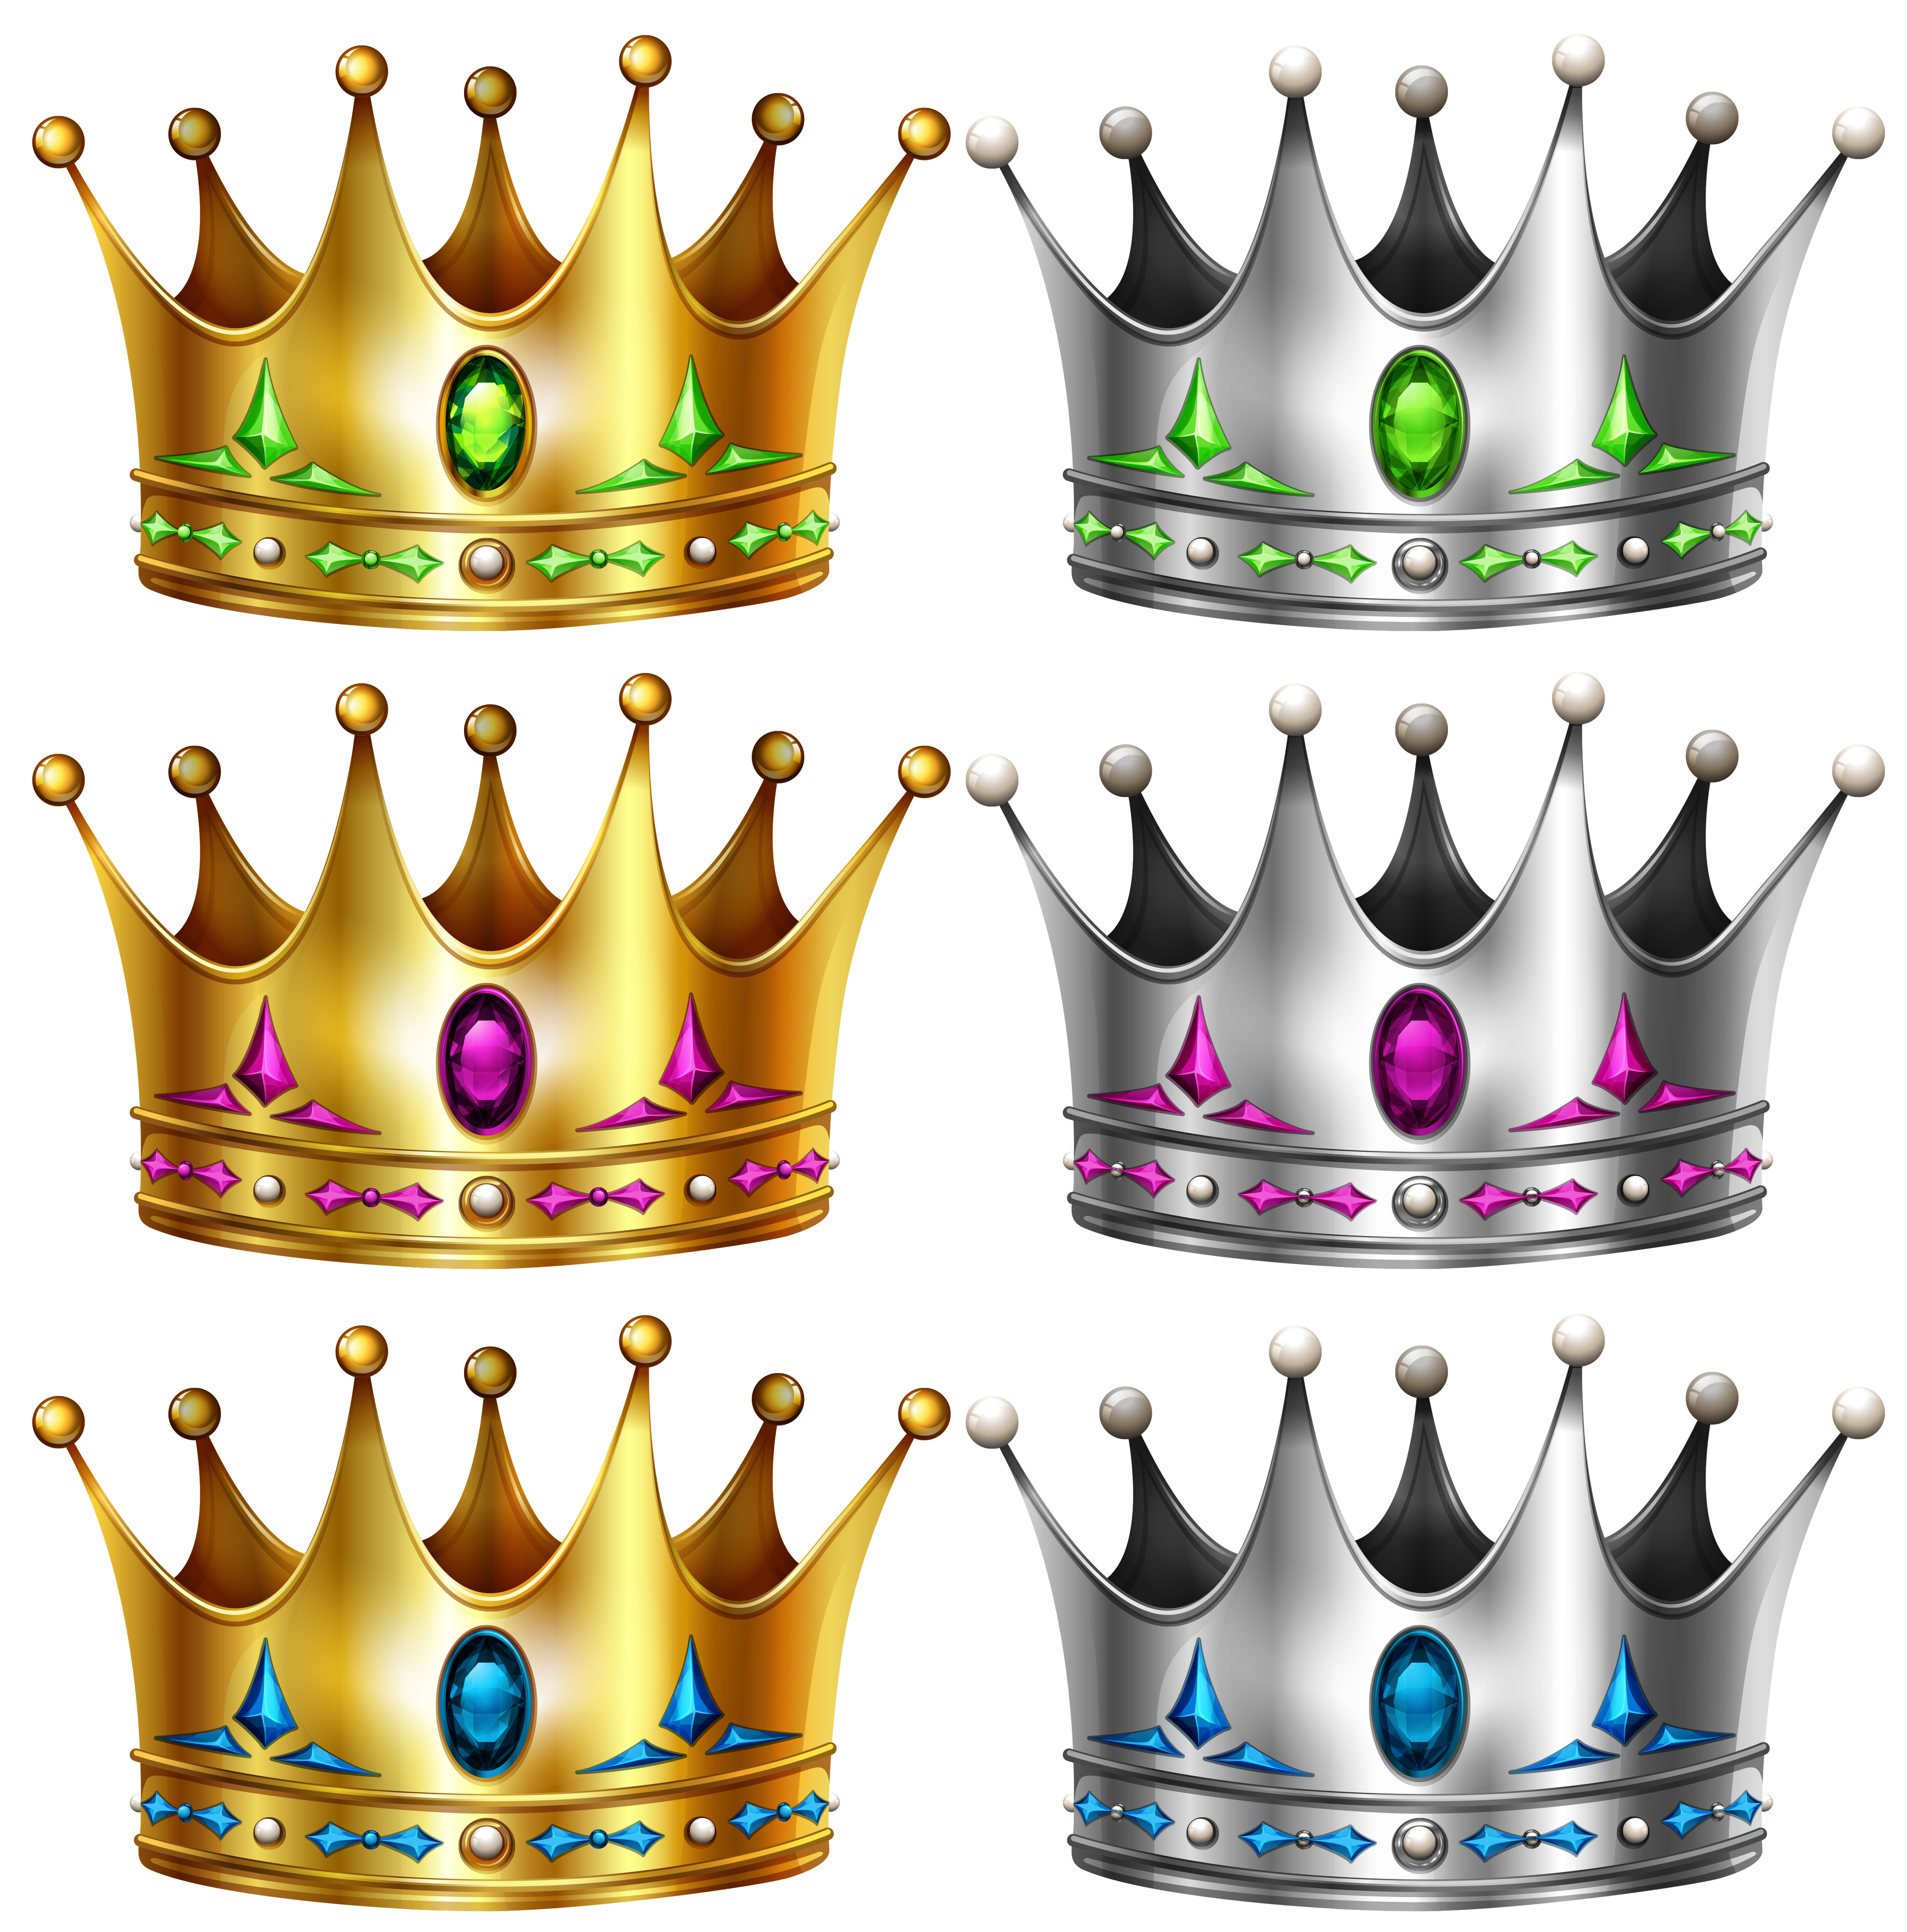 Download Crowns 430445 - Download Free Vectors, Clipart Graphics ...